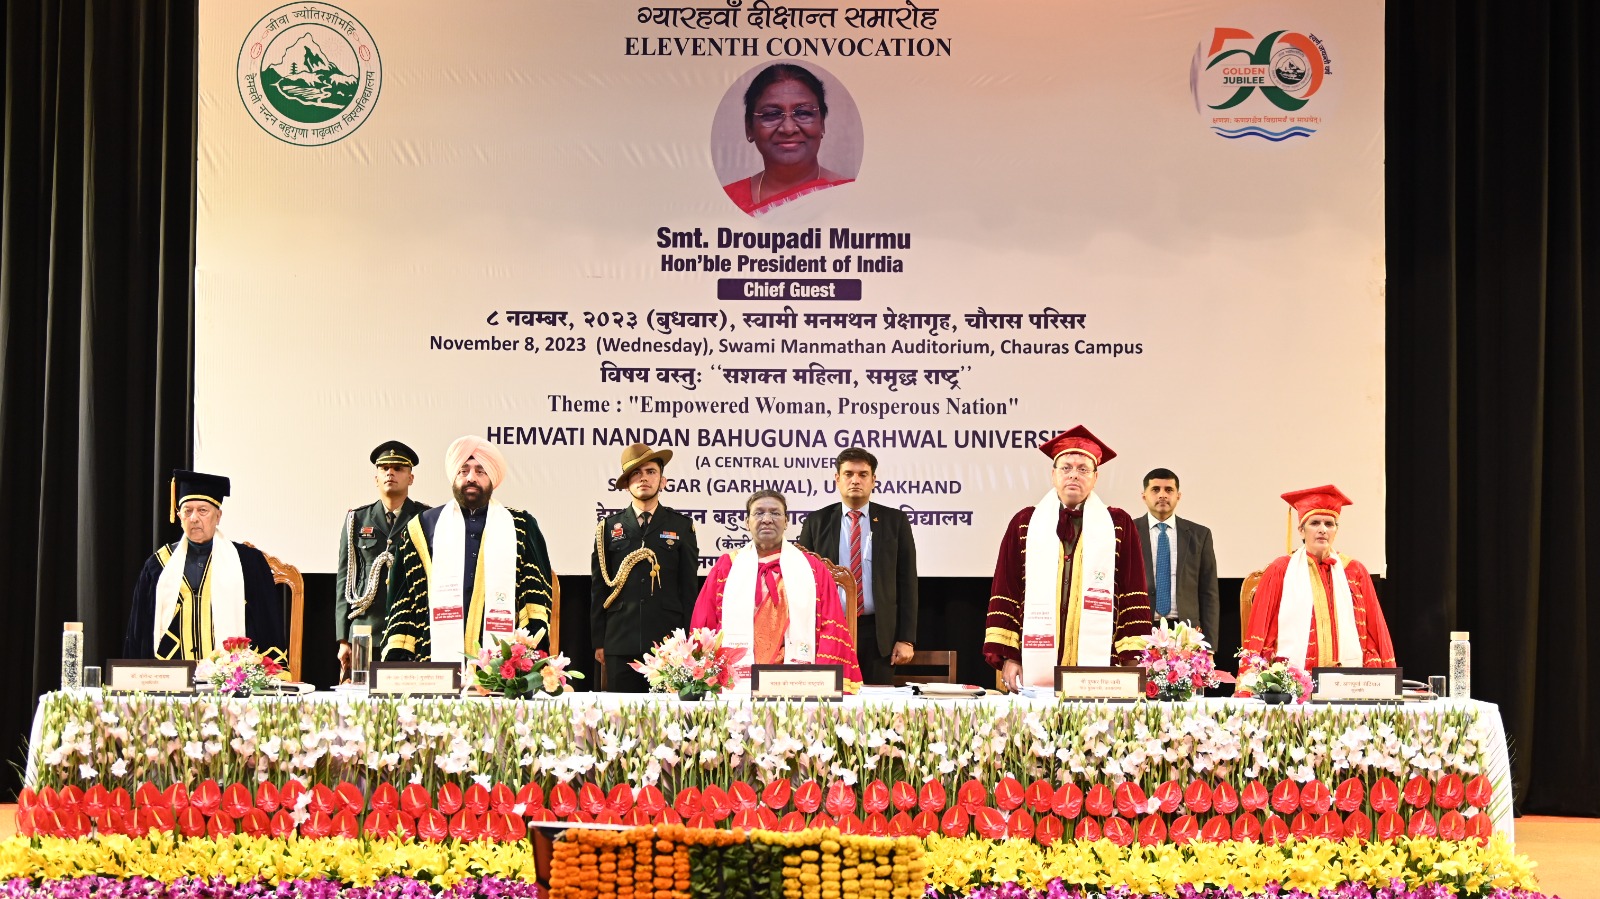 Work to connect education with society: President Draupadi Murmu